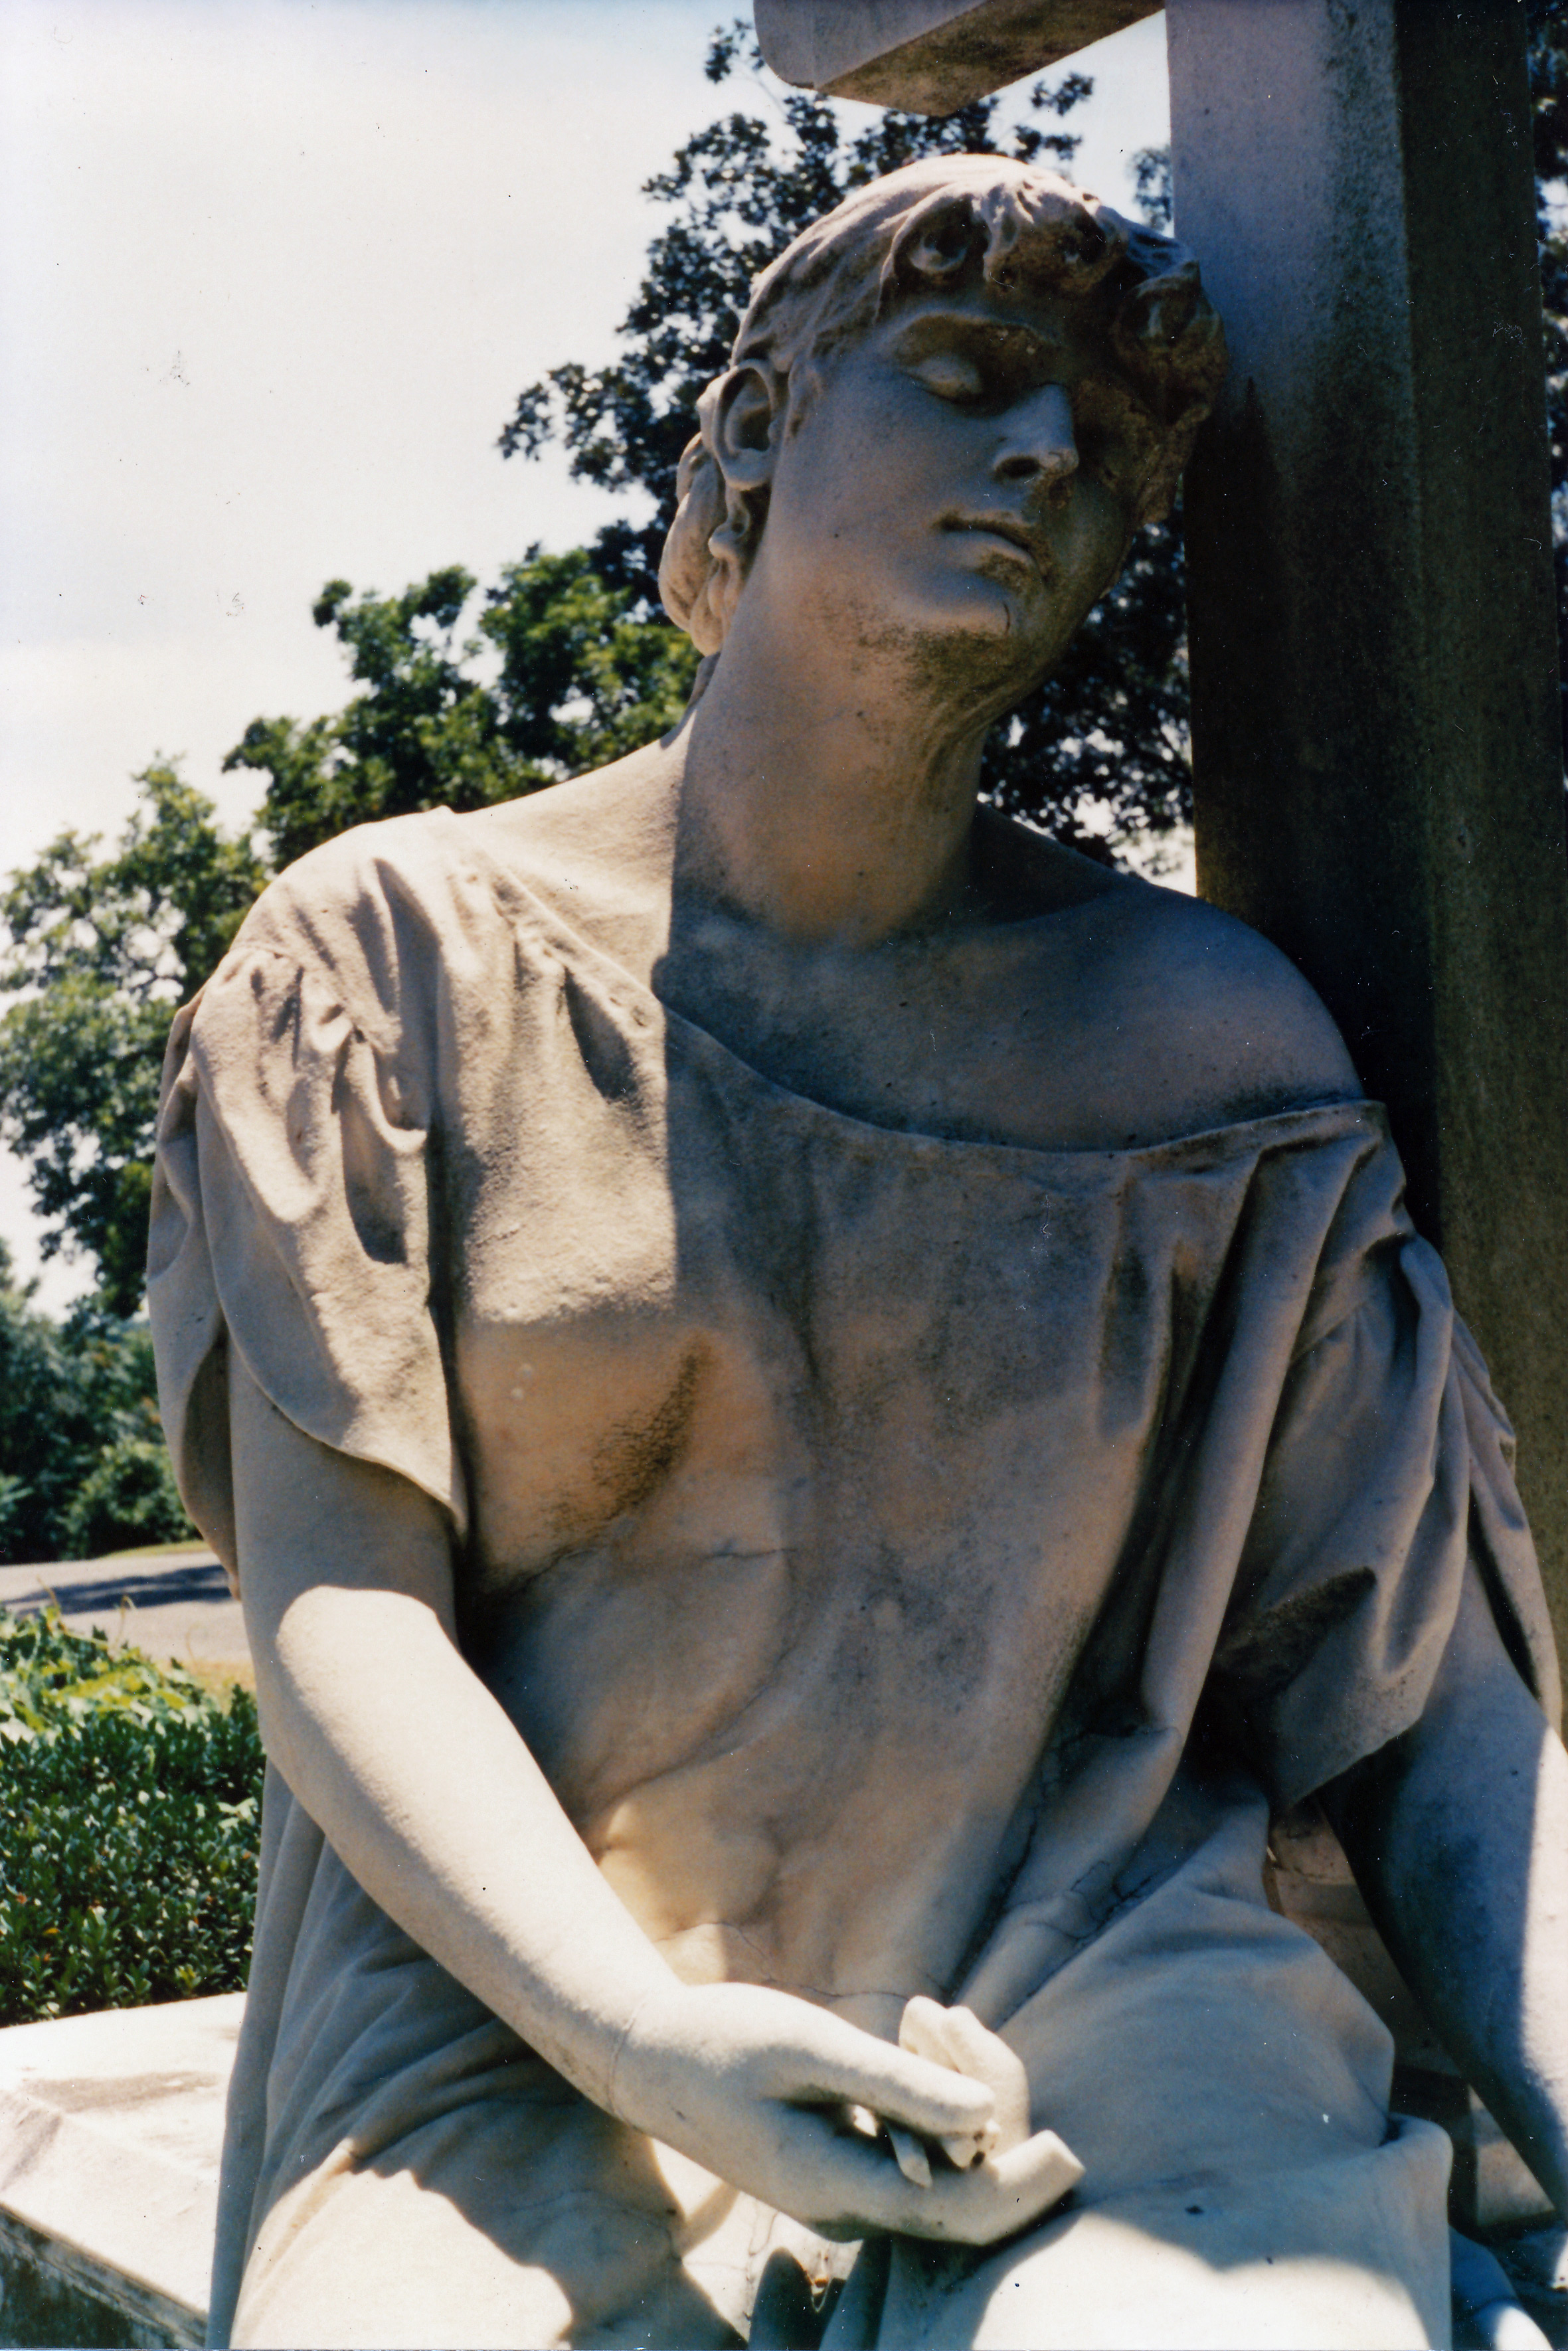 http://jrandomimage.com/images/hollywood-cemetery-statue.jpg